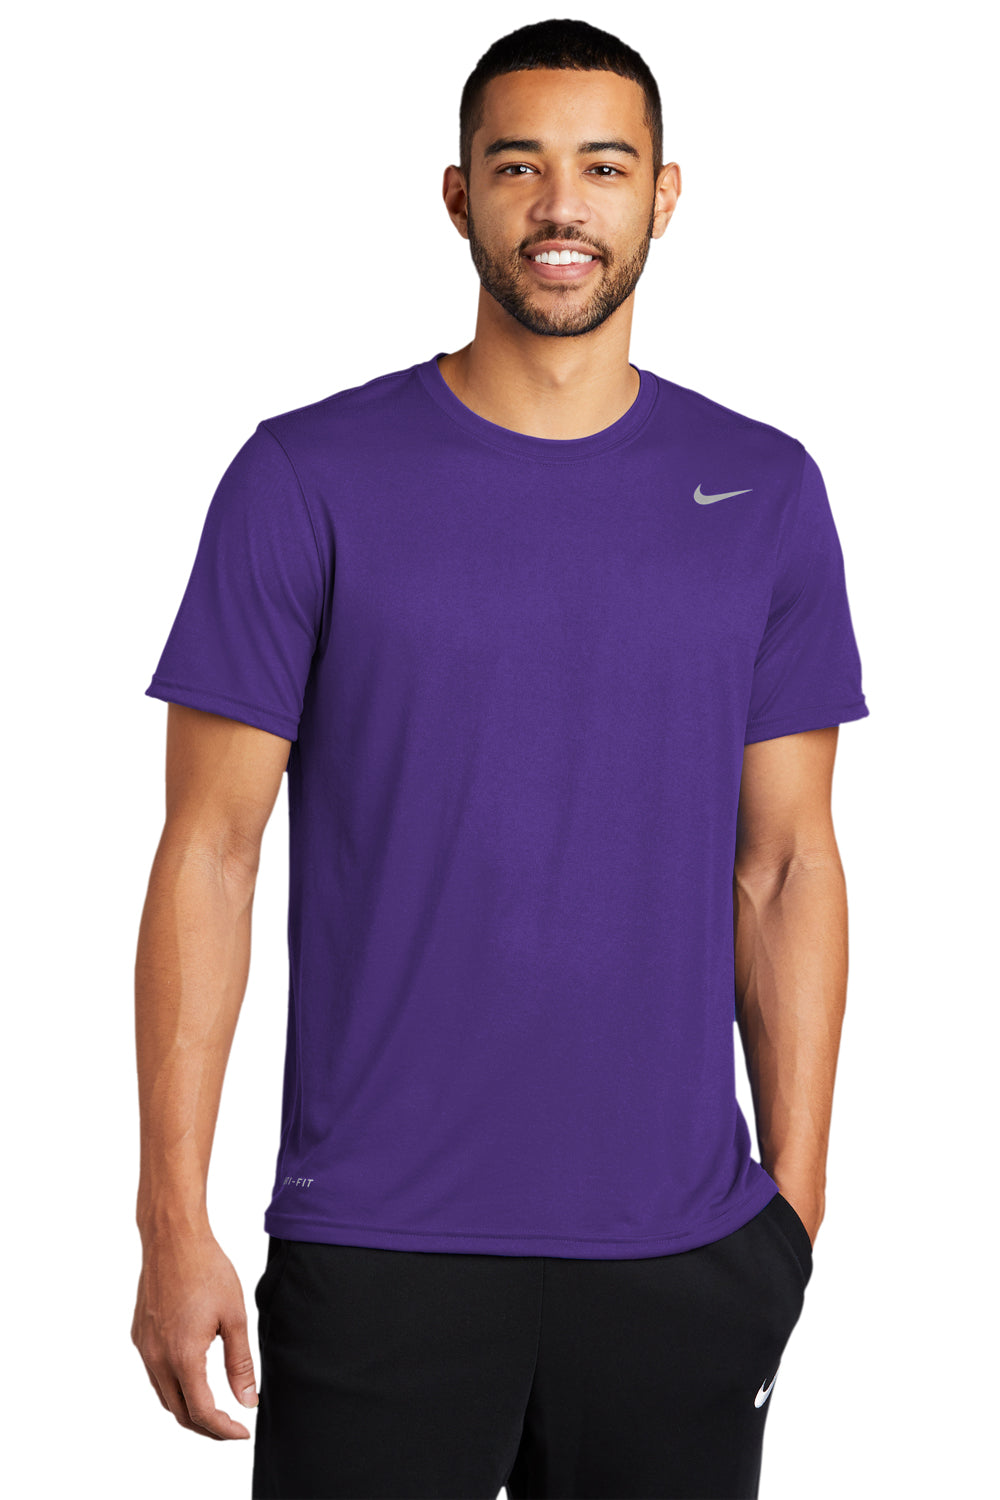 Mens Purple Tops & T-Shirts.